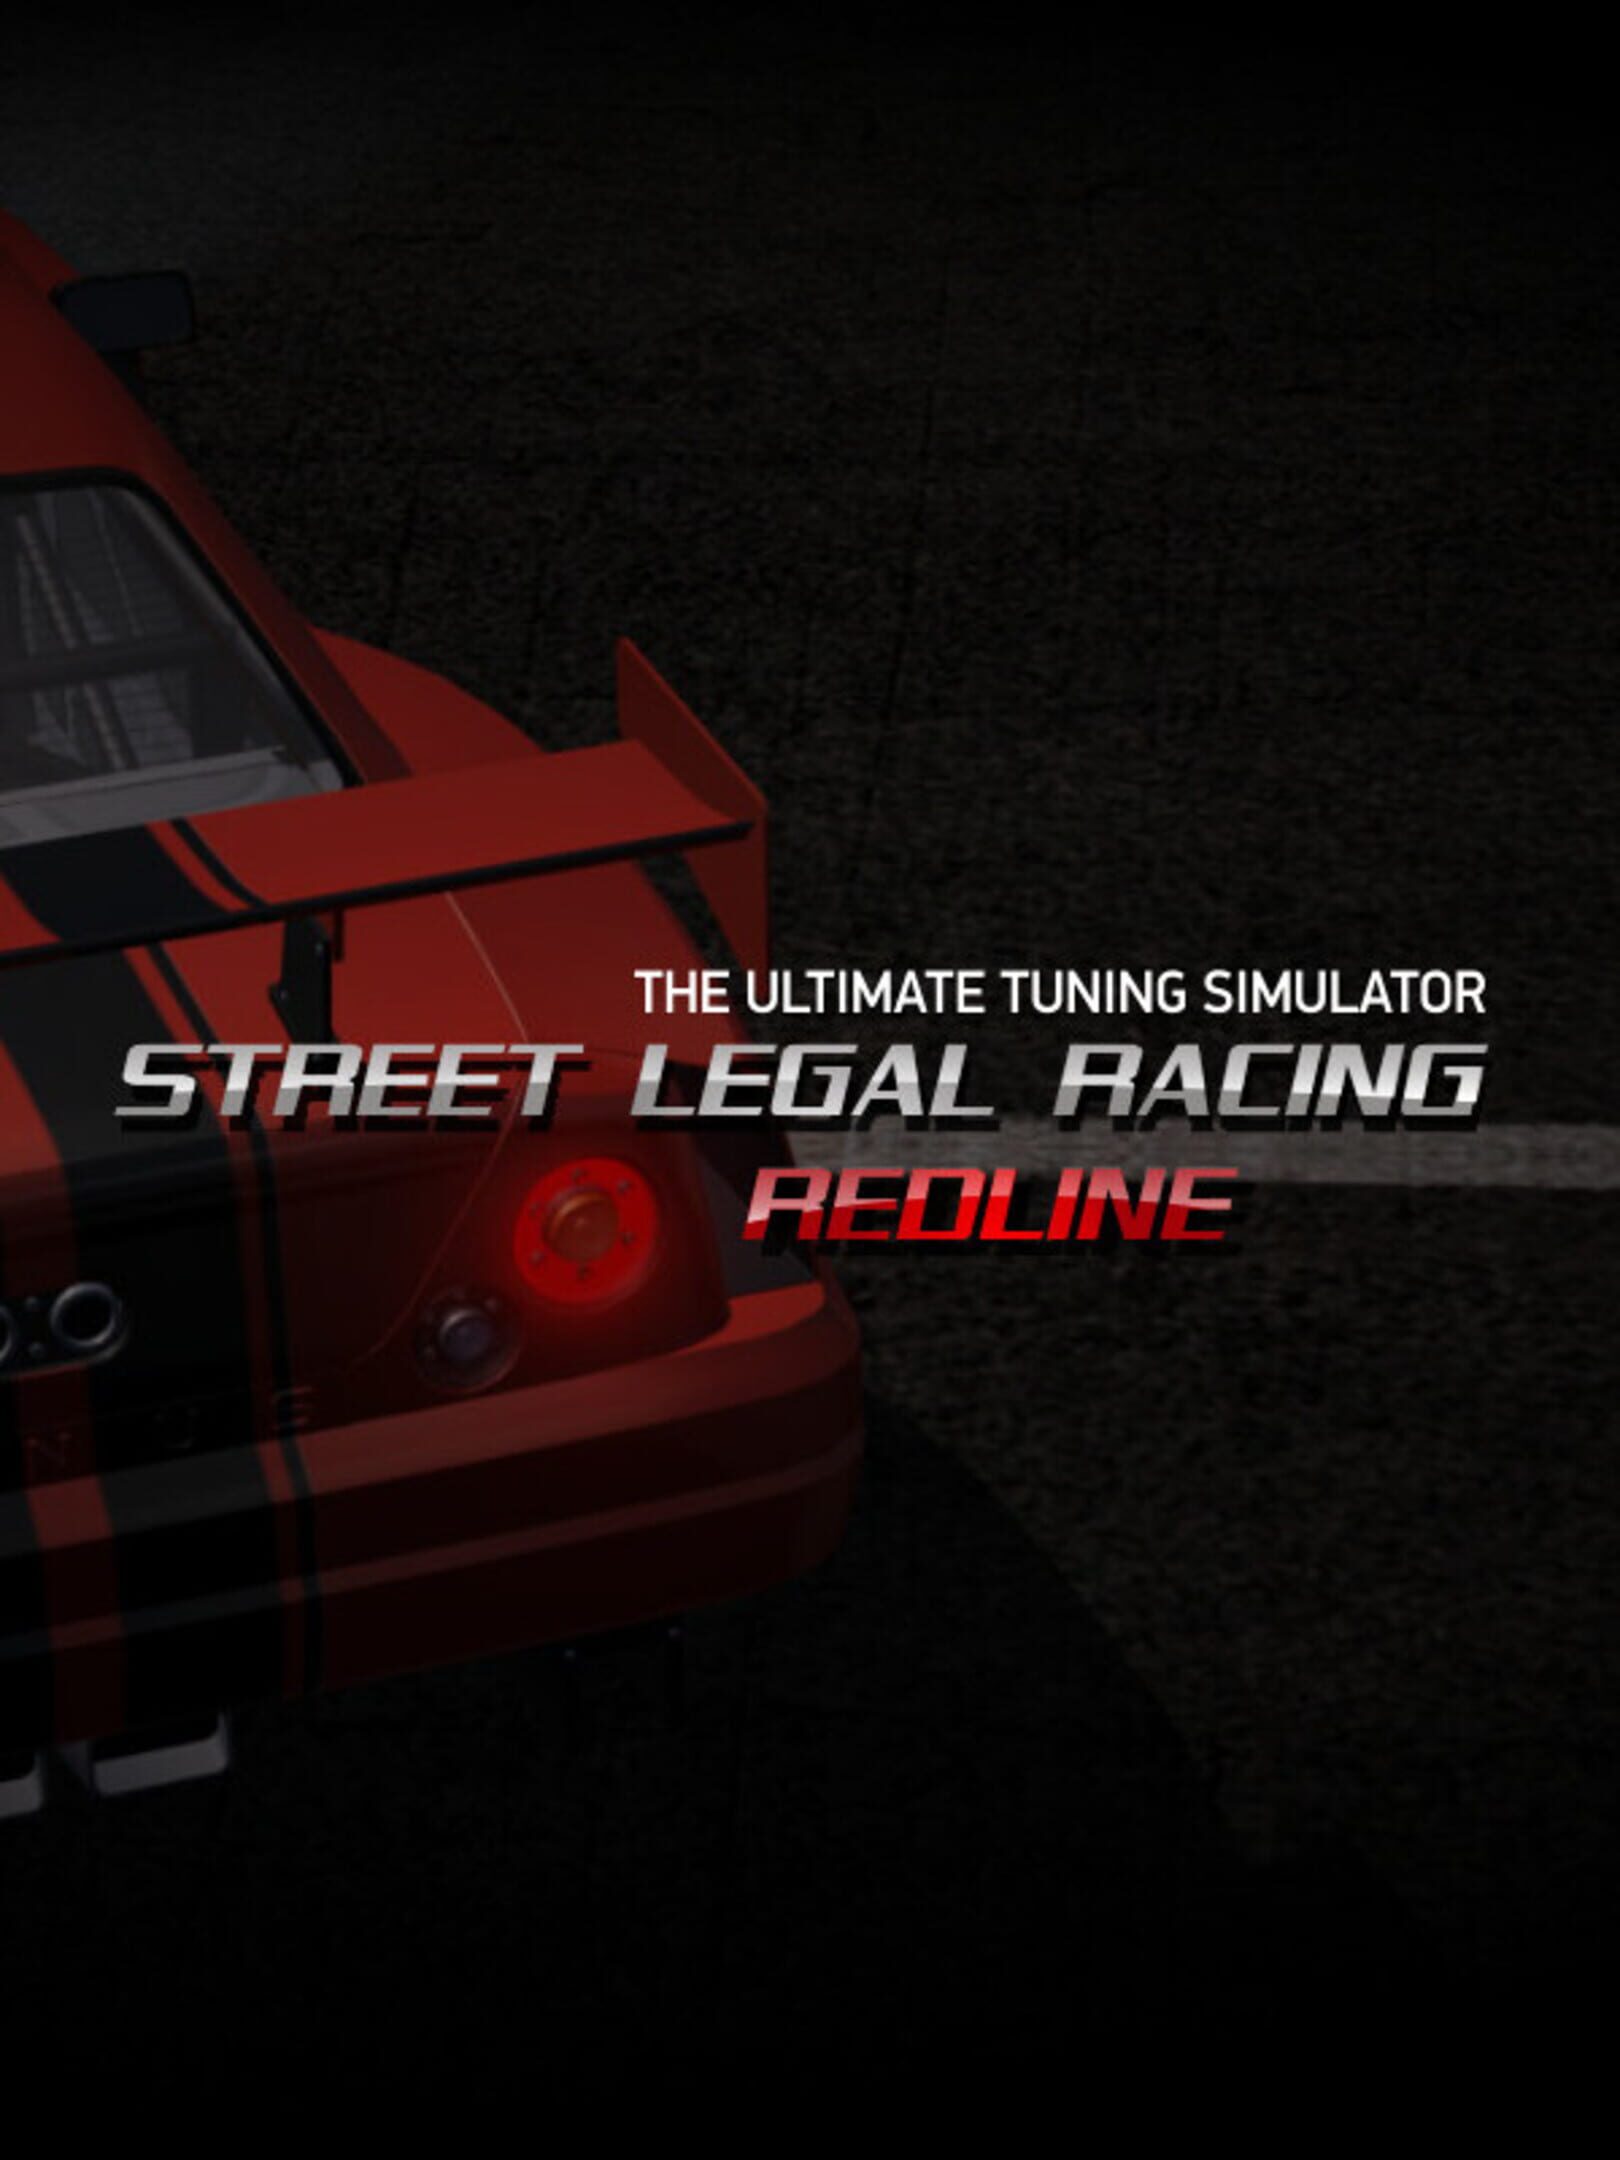 Is steam legal racing redline фото 74